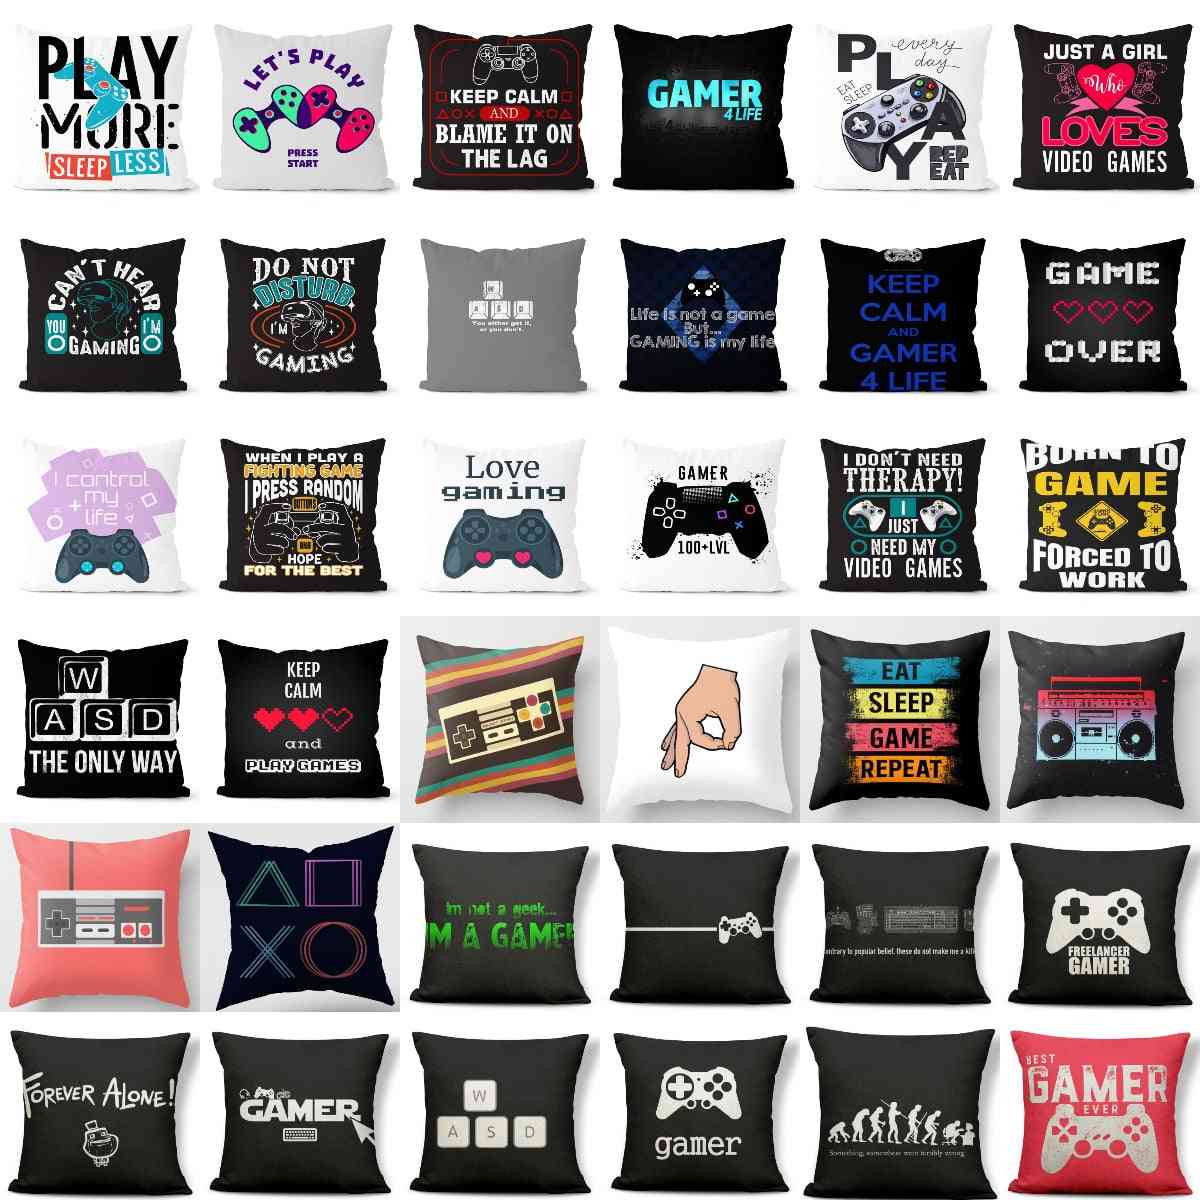 Super-hot Fan Video Games, Cushions Decorative, Pillows Case